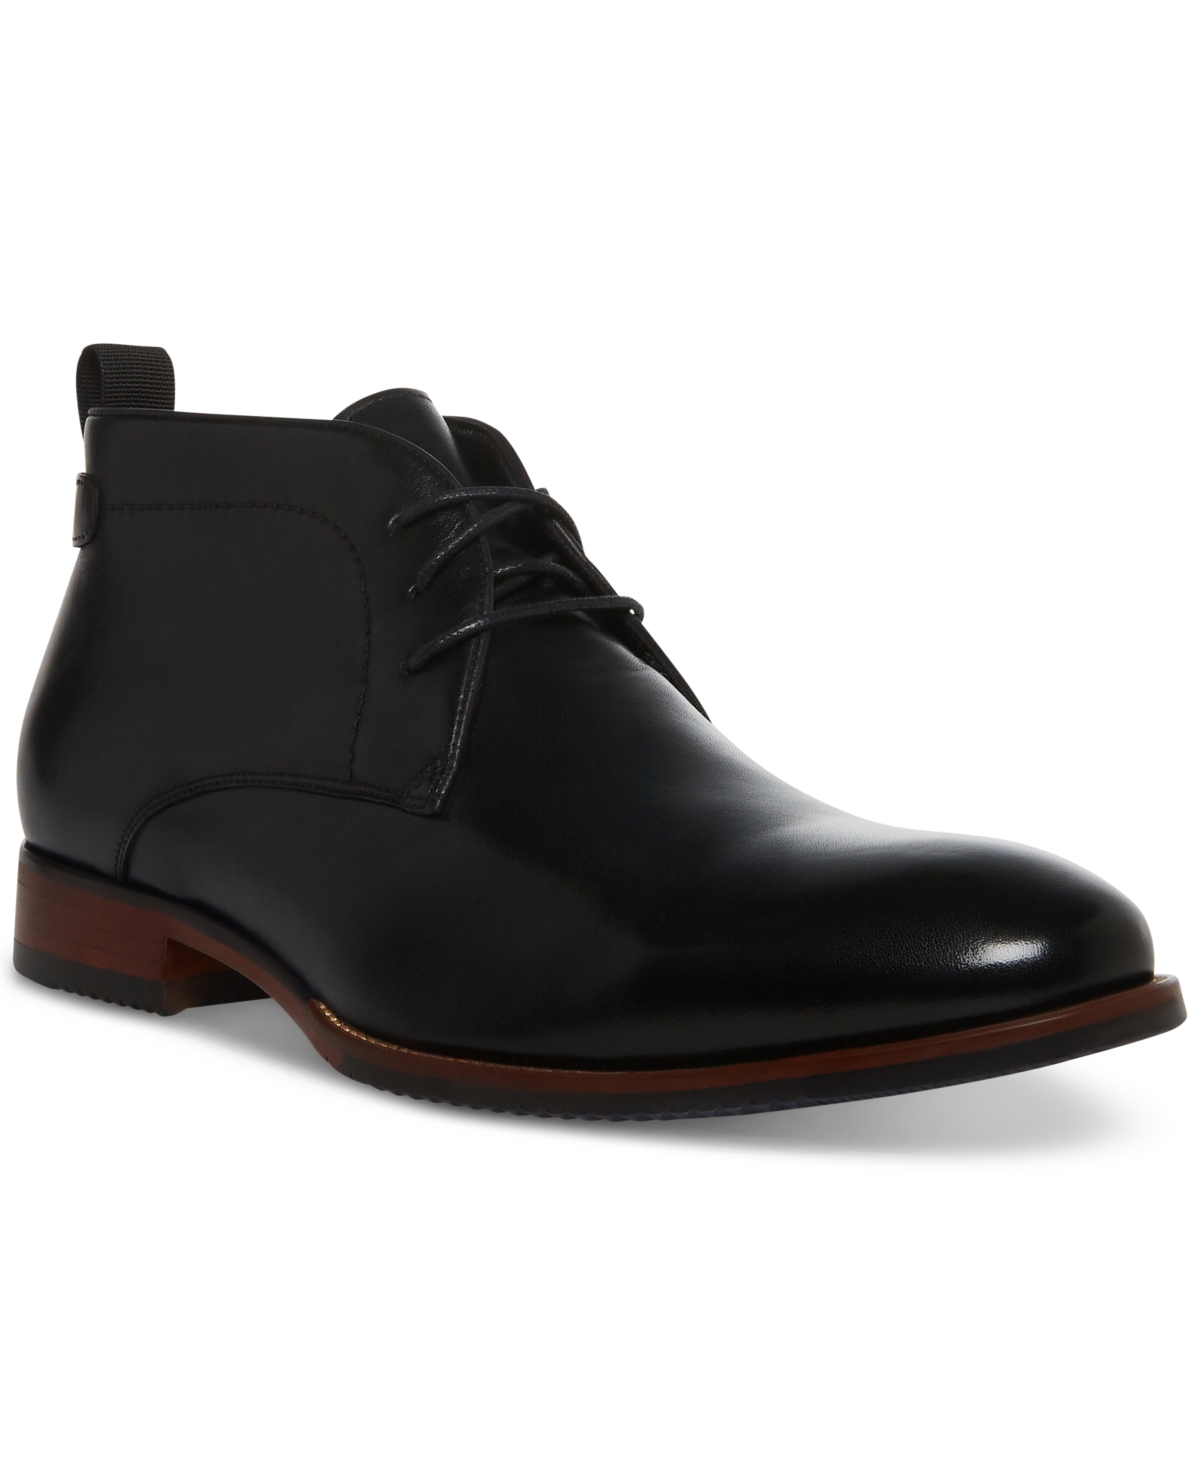 Men's Shaunn Leather Chukka Boot - Black